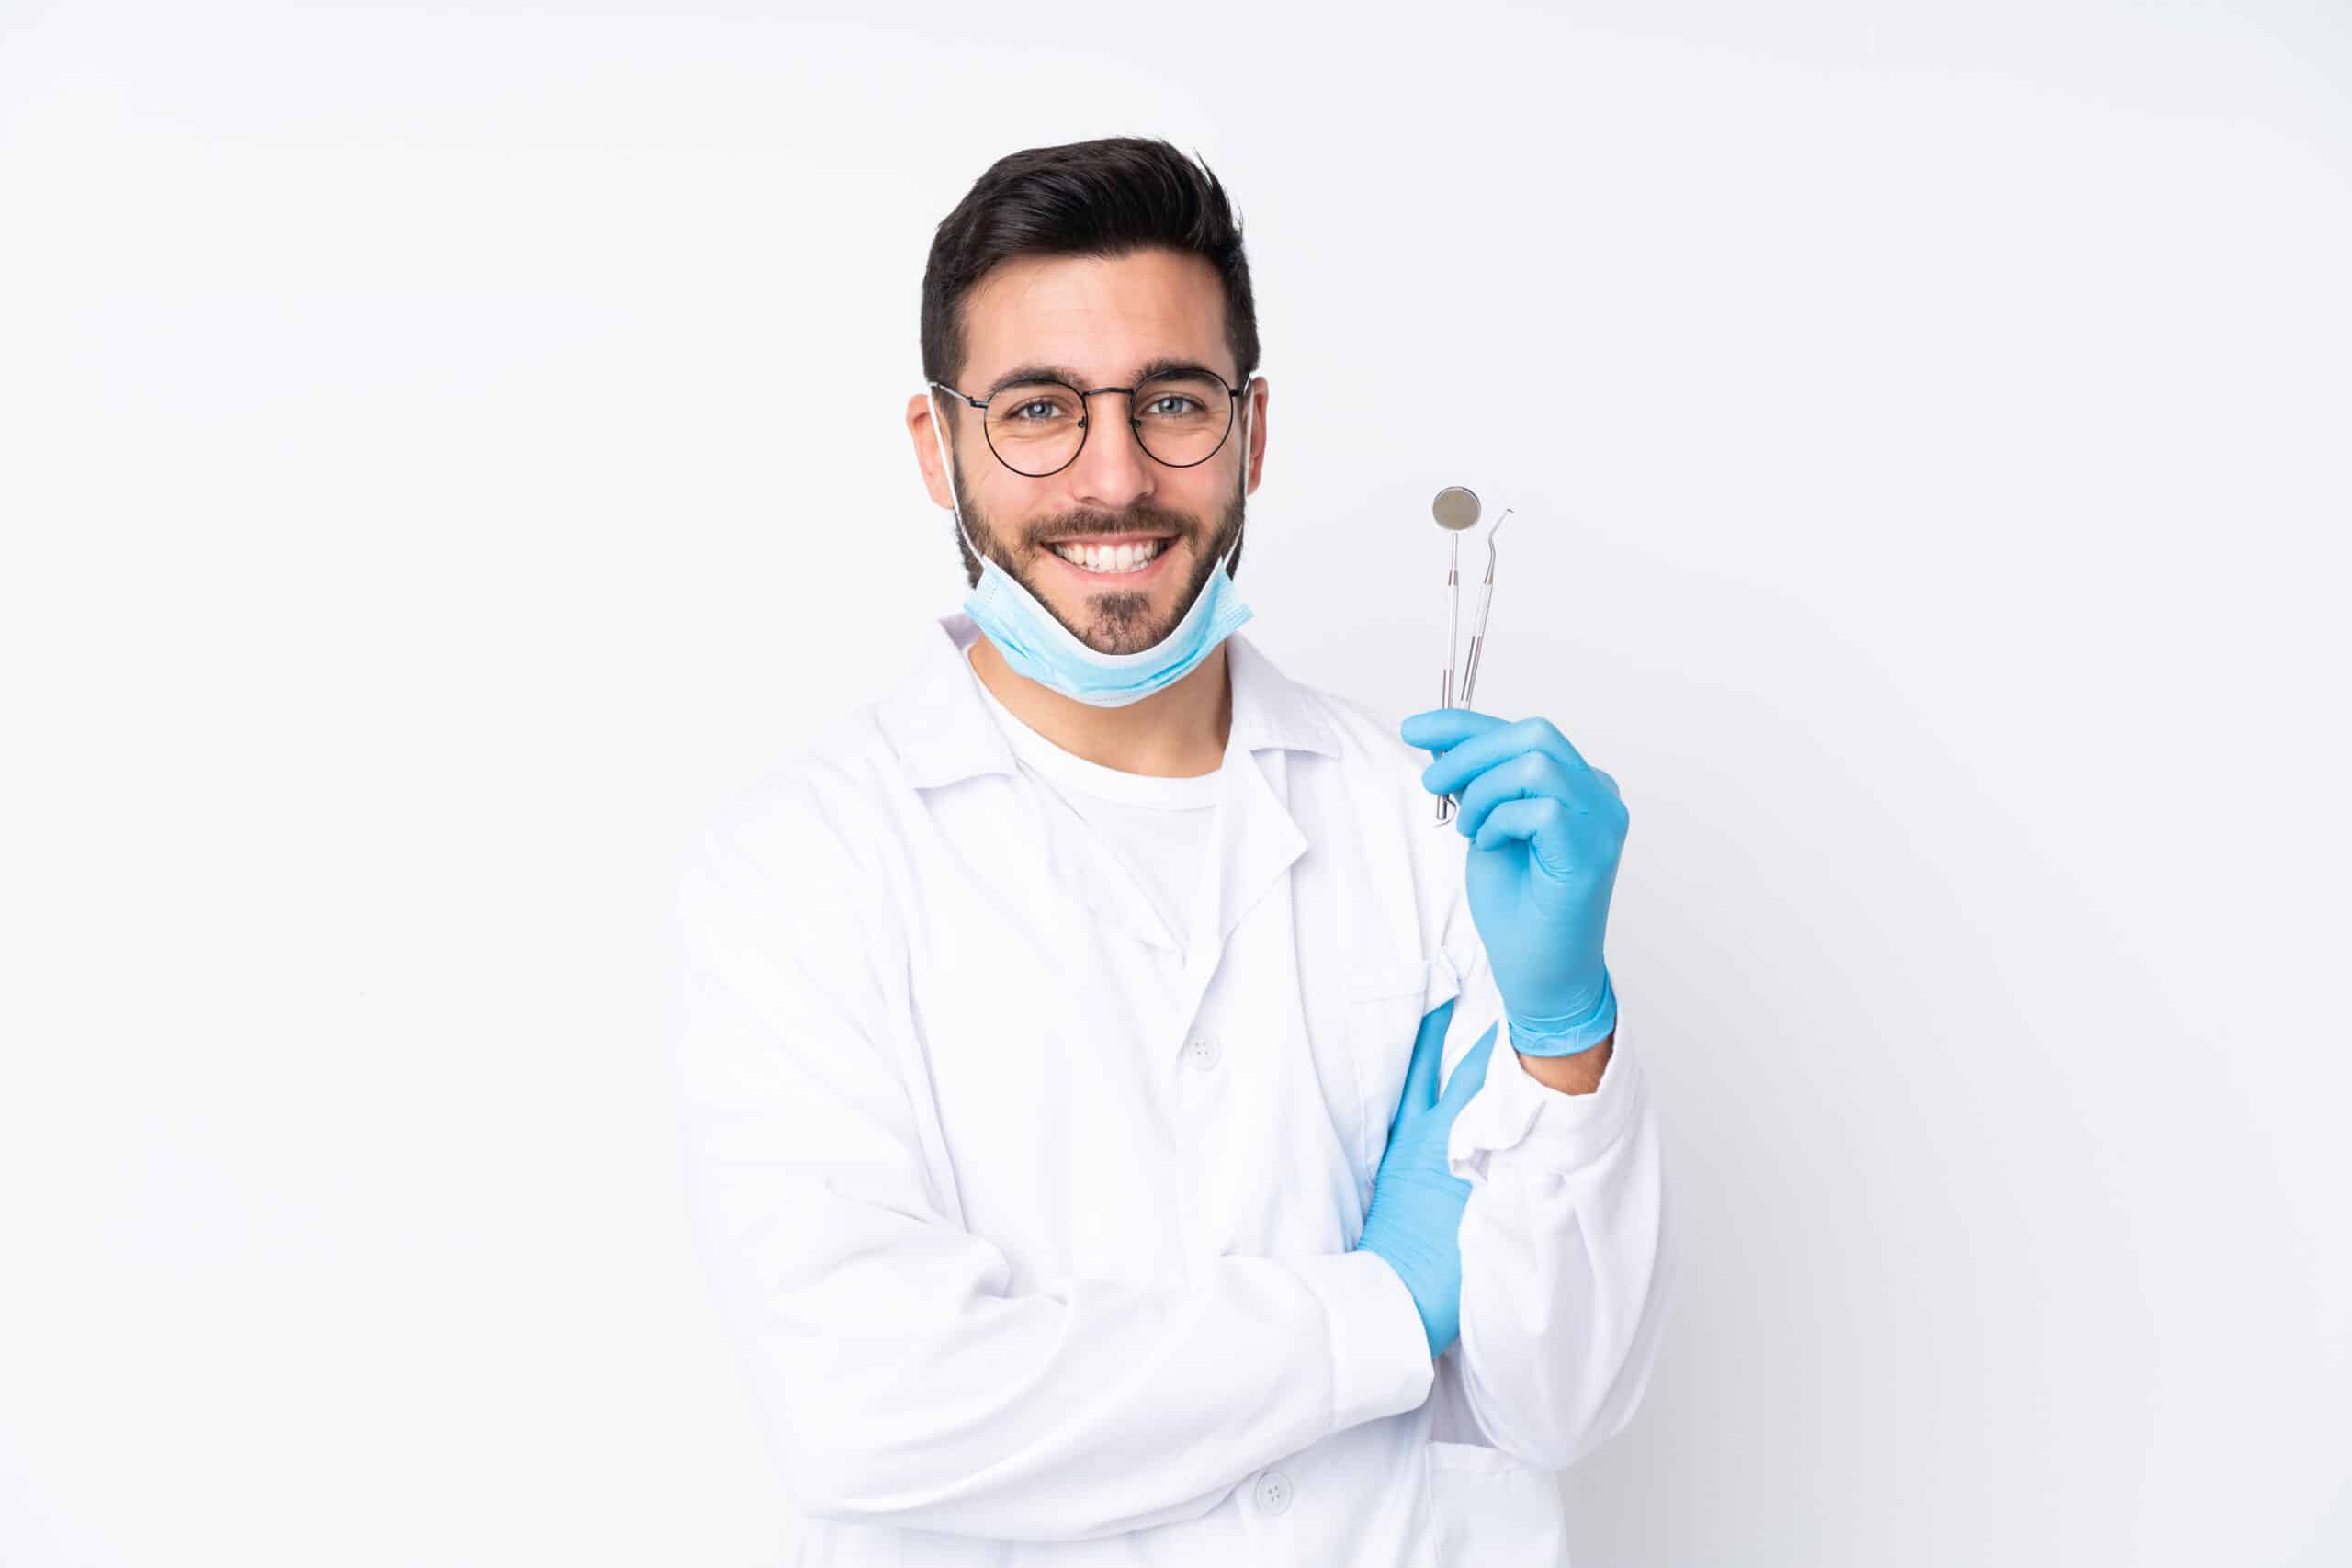 Dentist man holding tools